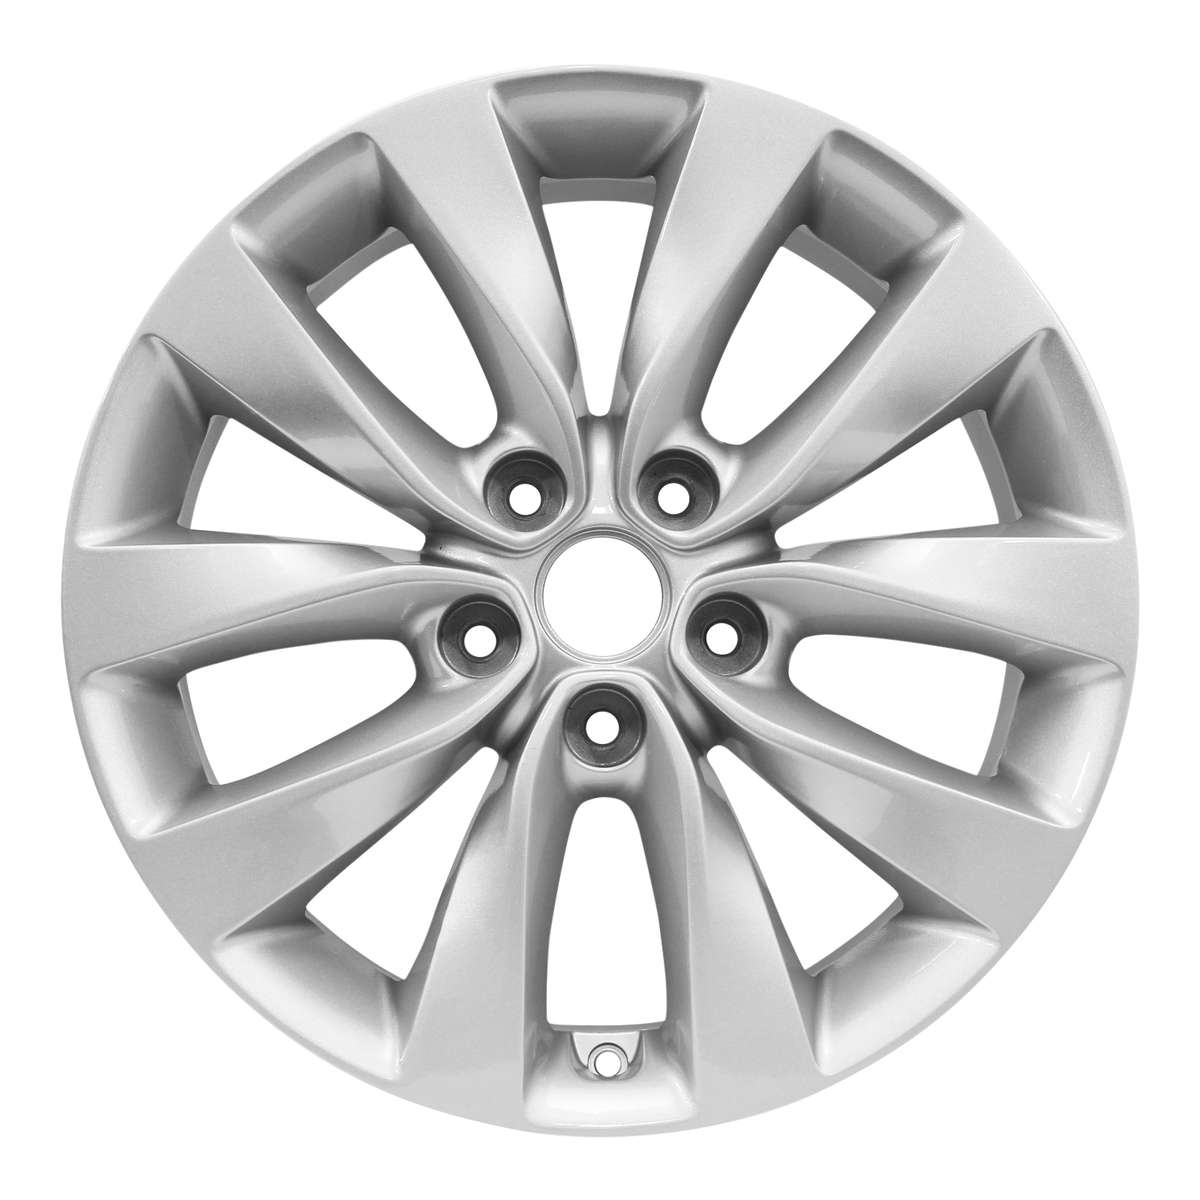 2018 Kia Optima New 17" Replacement Wheel Rim RW74731S